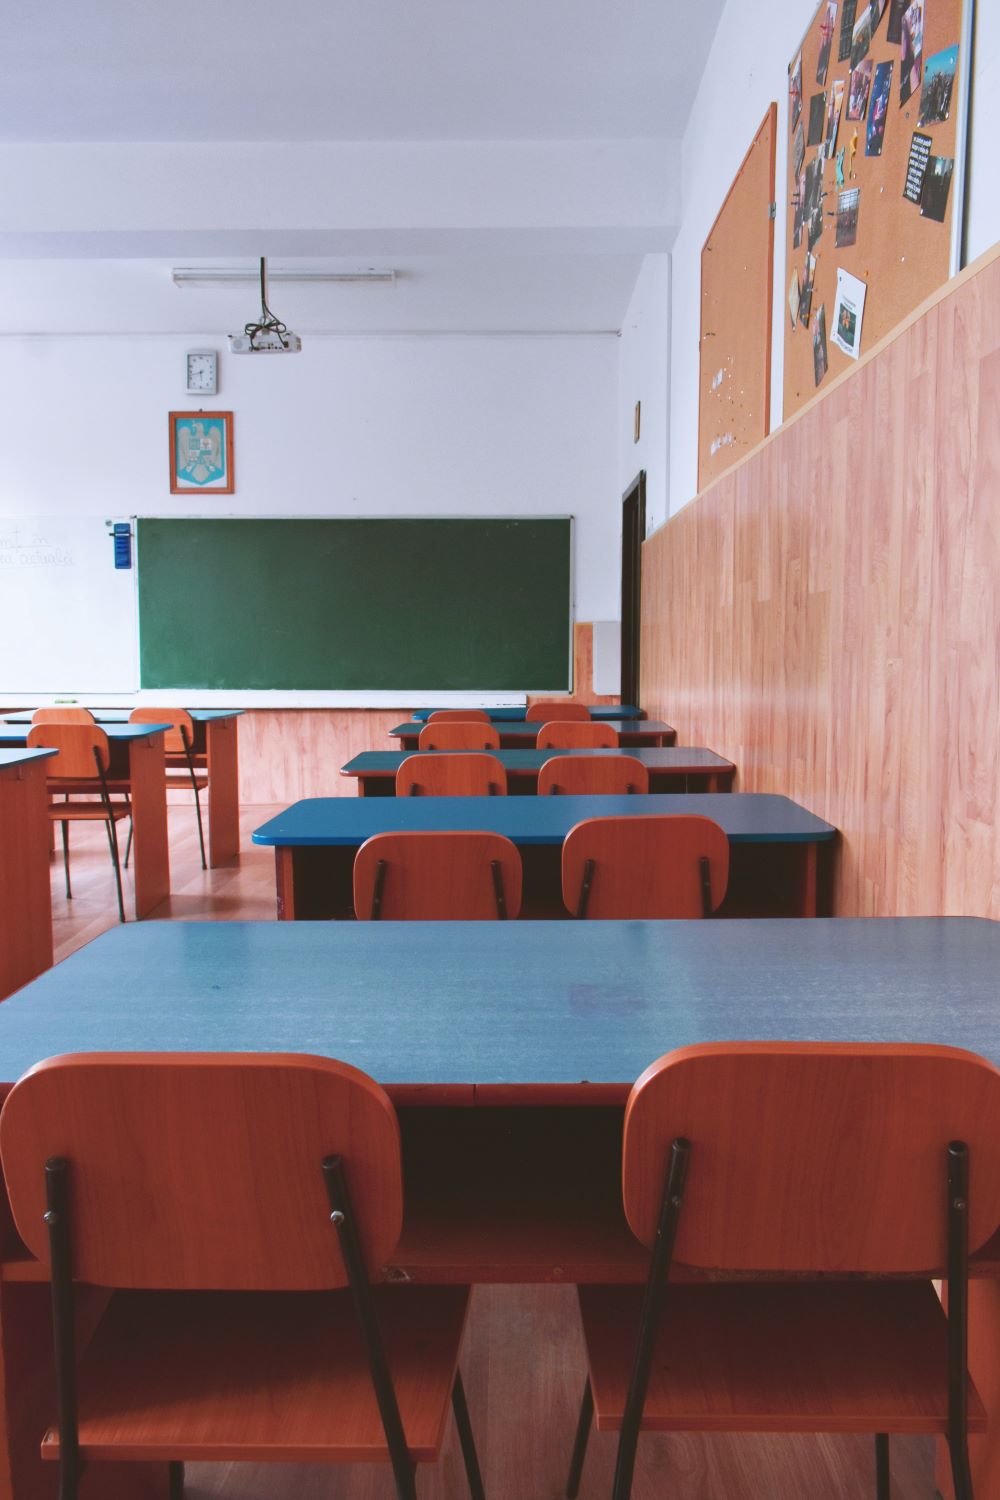 Texas is Experiencing a Mental Health Worker Shortage in Schools